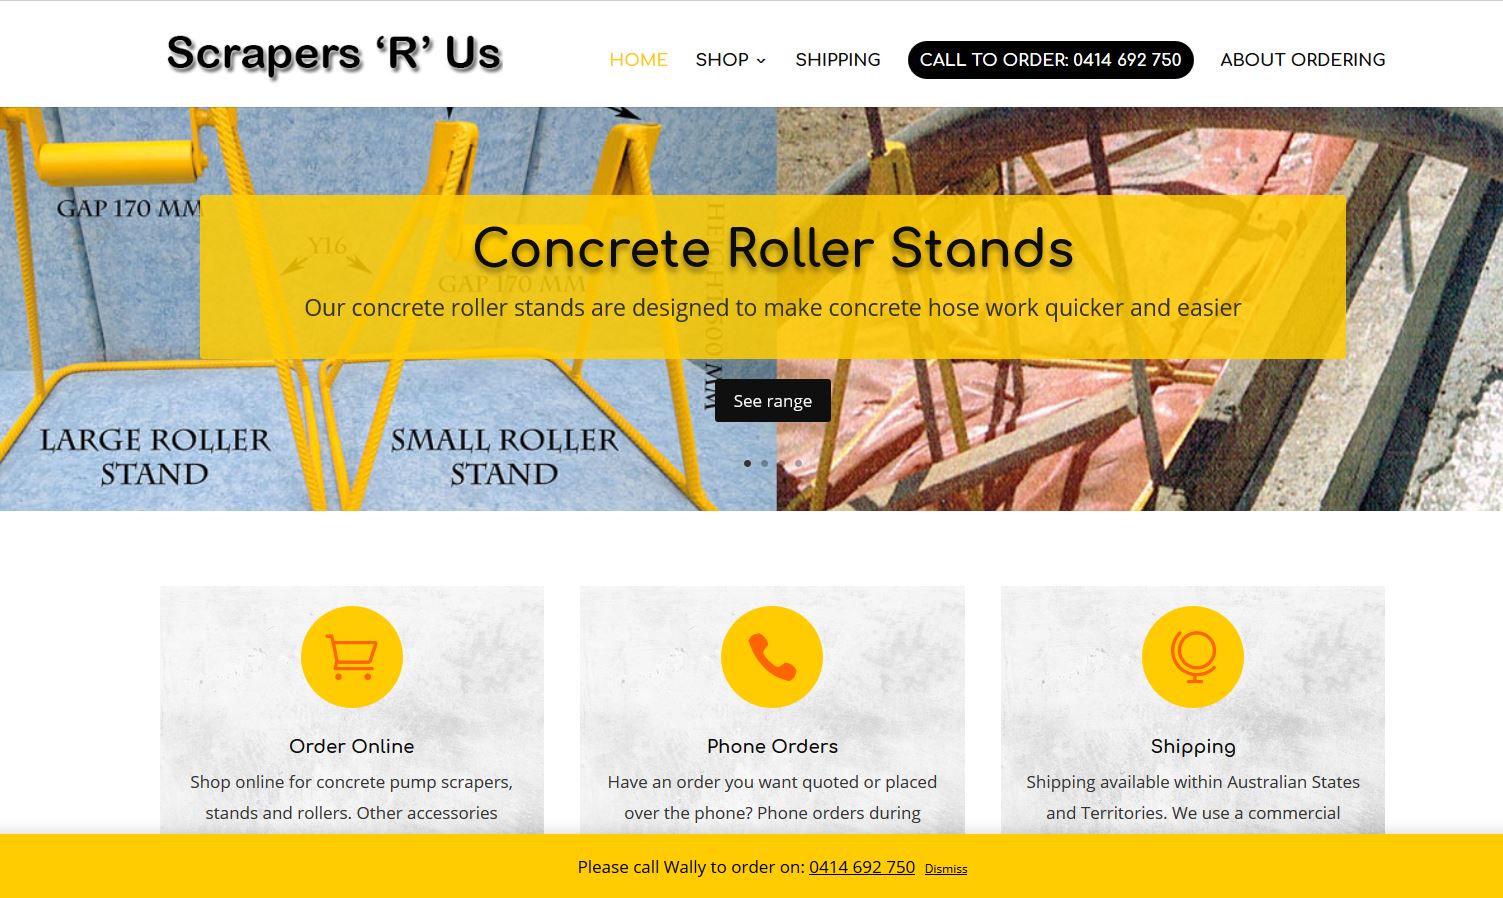 Website for Scrapers R Us